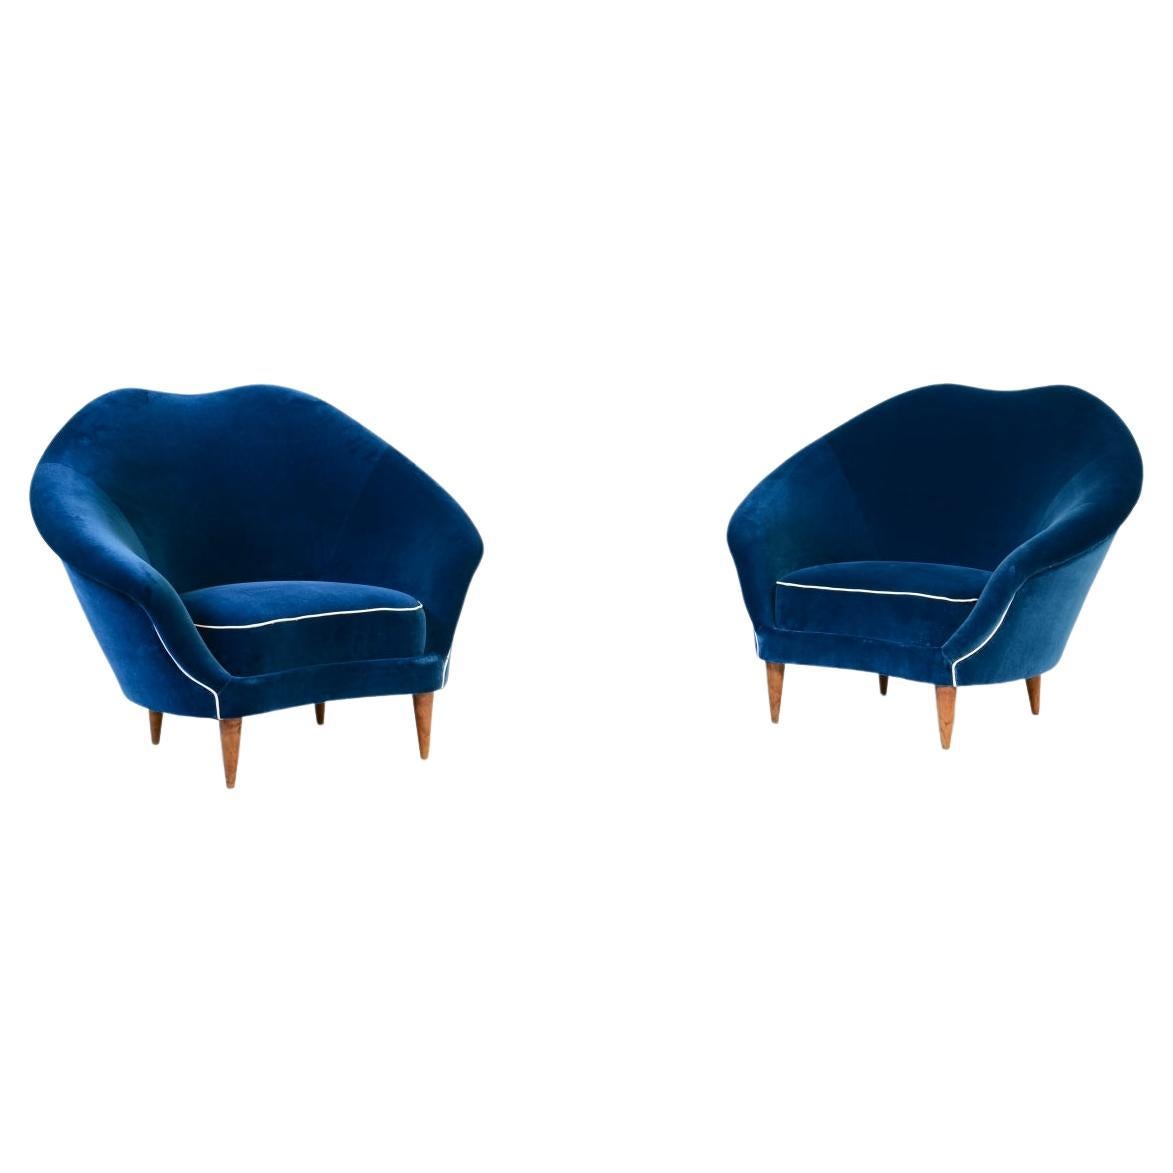 COD-1894
Federico Munari

Pair of armchairs upholstered in velvet and cotton.

Italian manufacture around 1950.